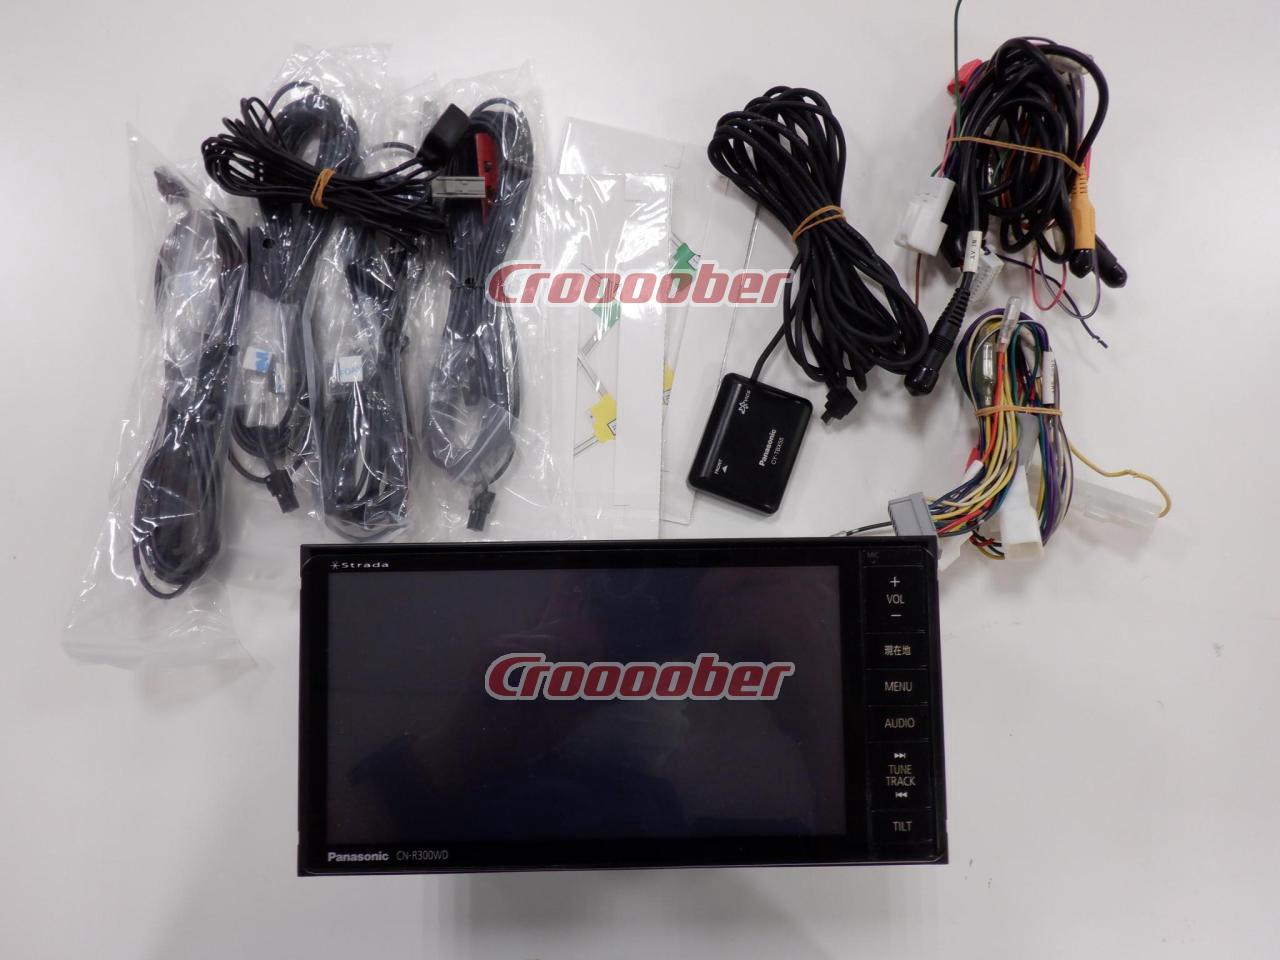 Panasonic CN-R300WD T11546 | Memory Navigation(digital) | Croooober